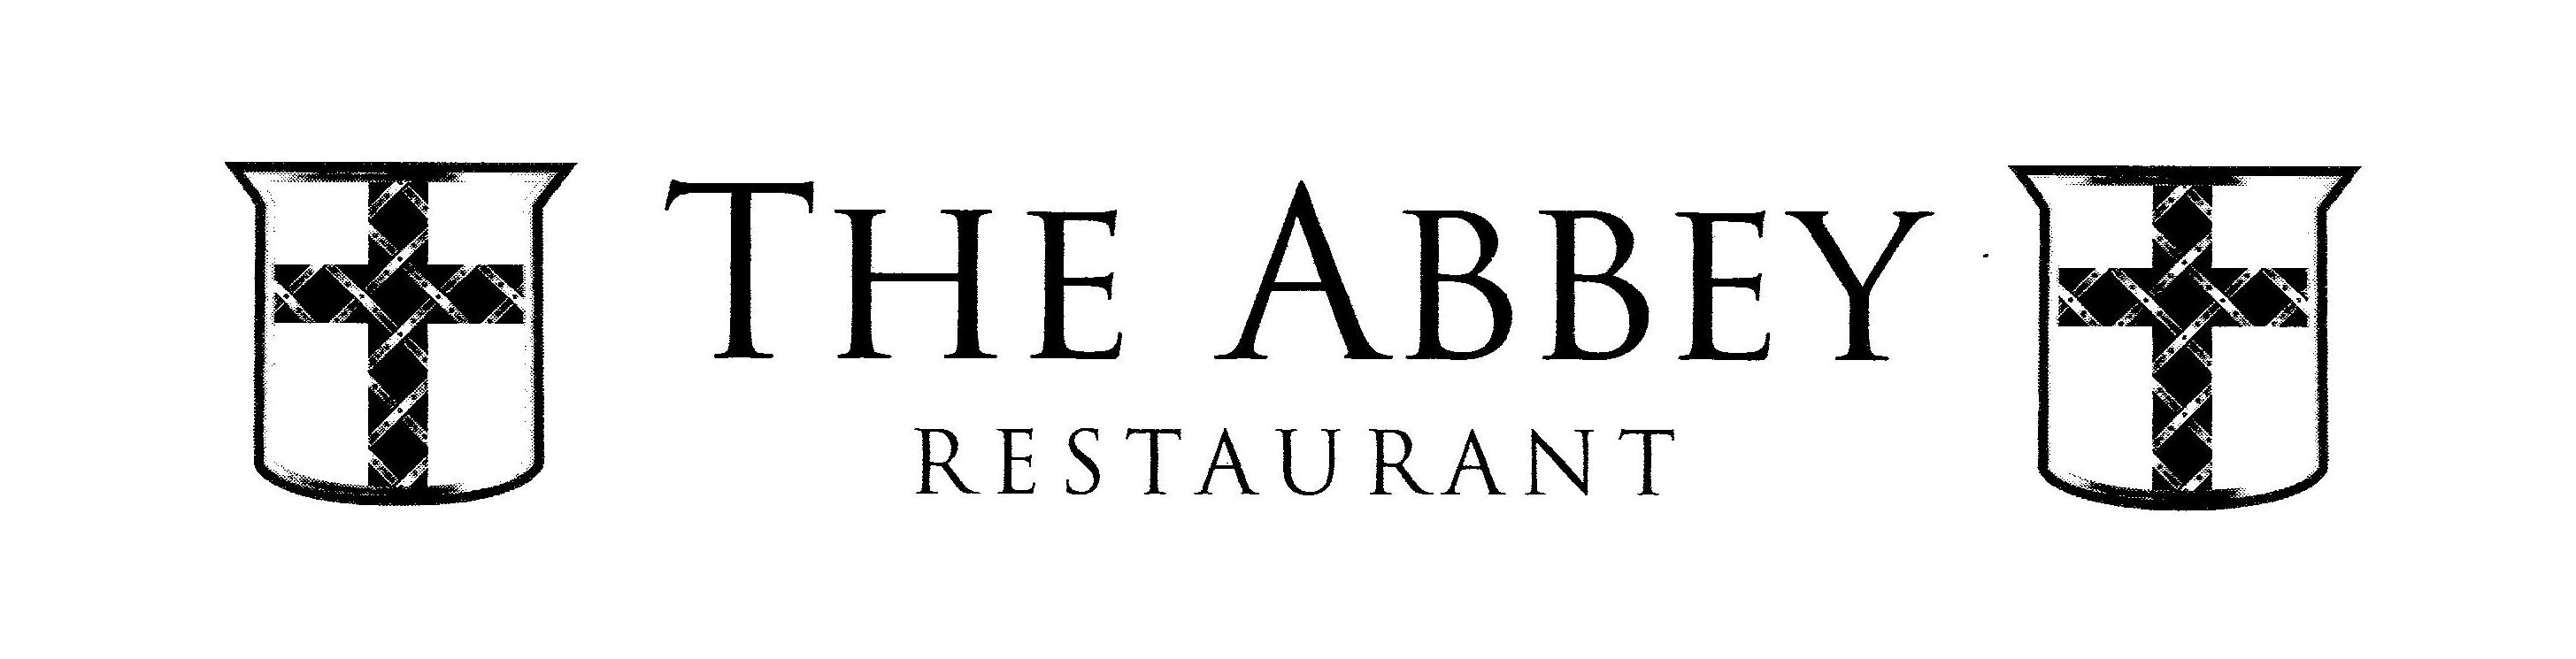 The Abbey Restaurant Logo